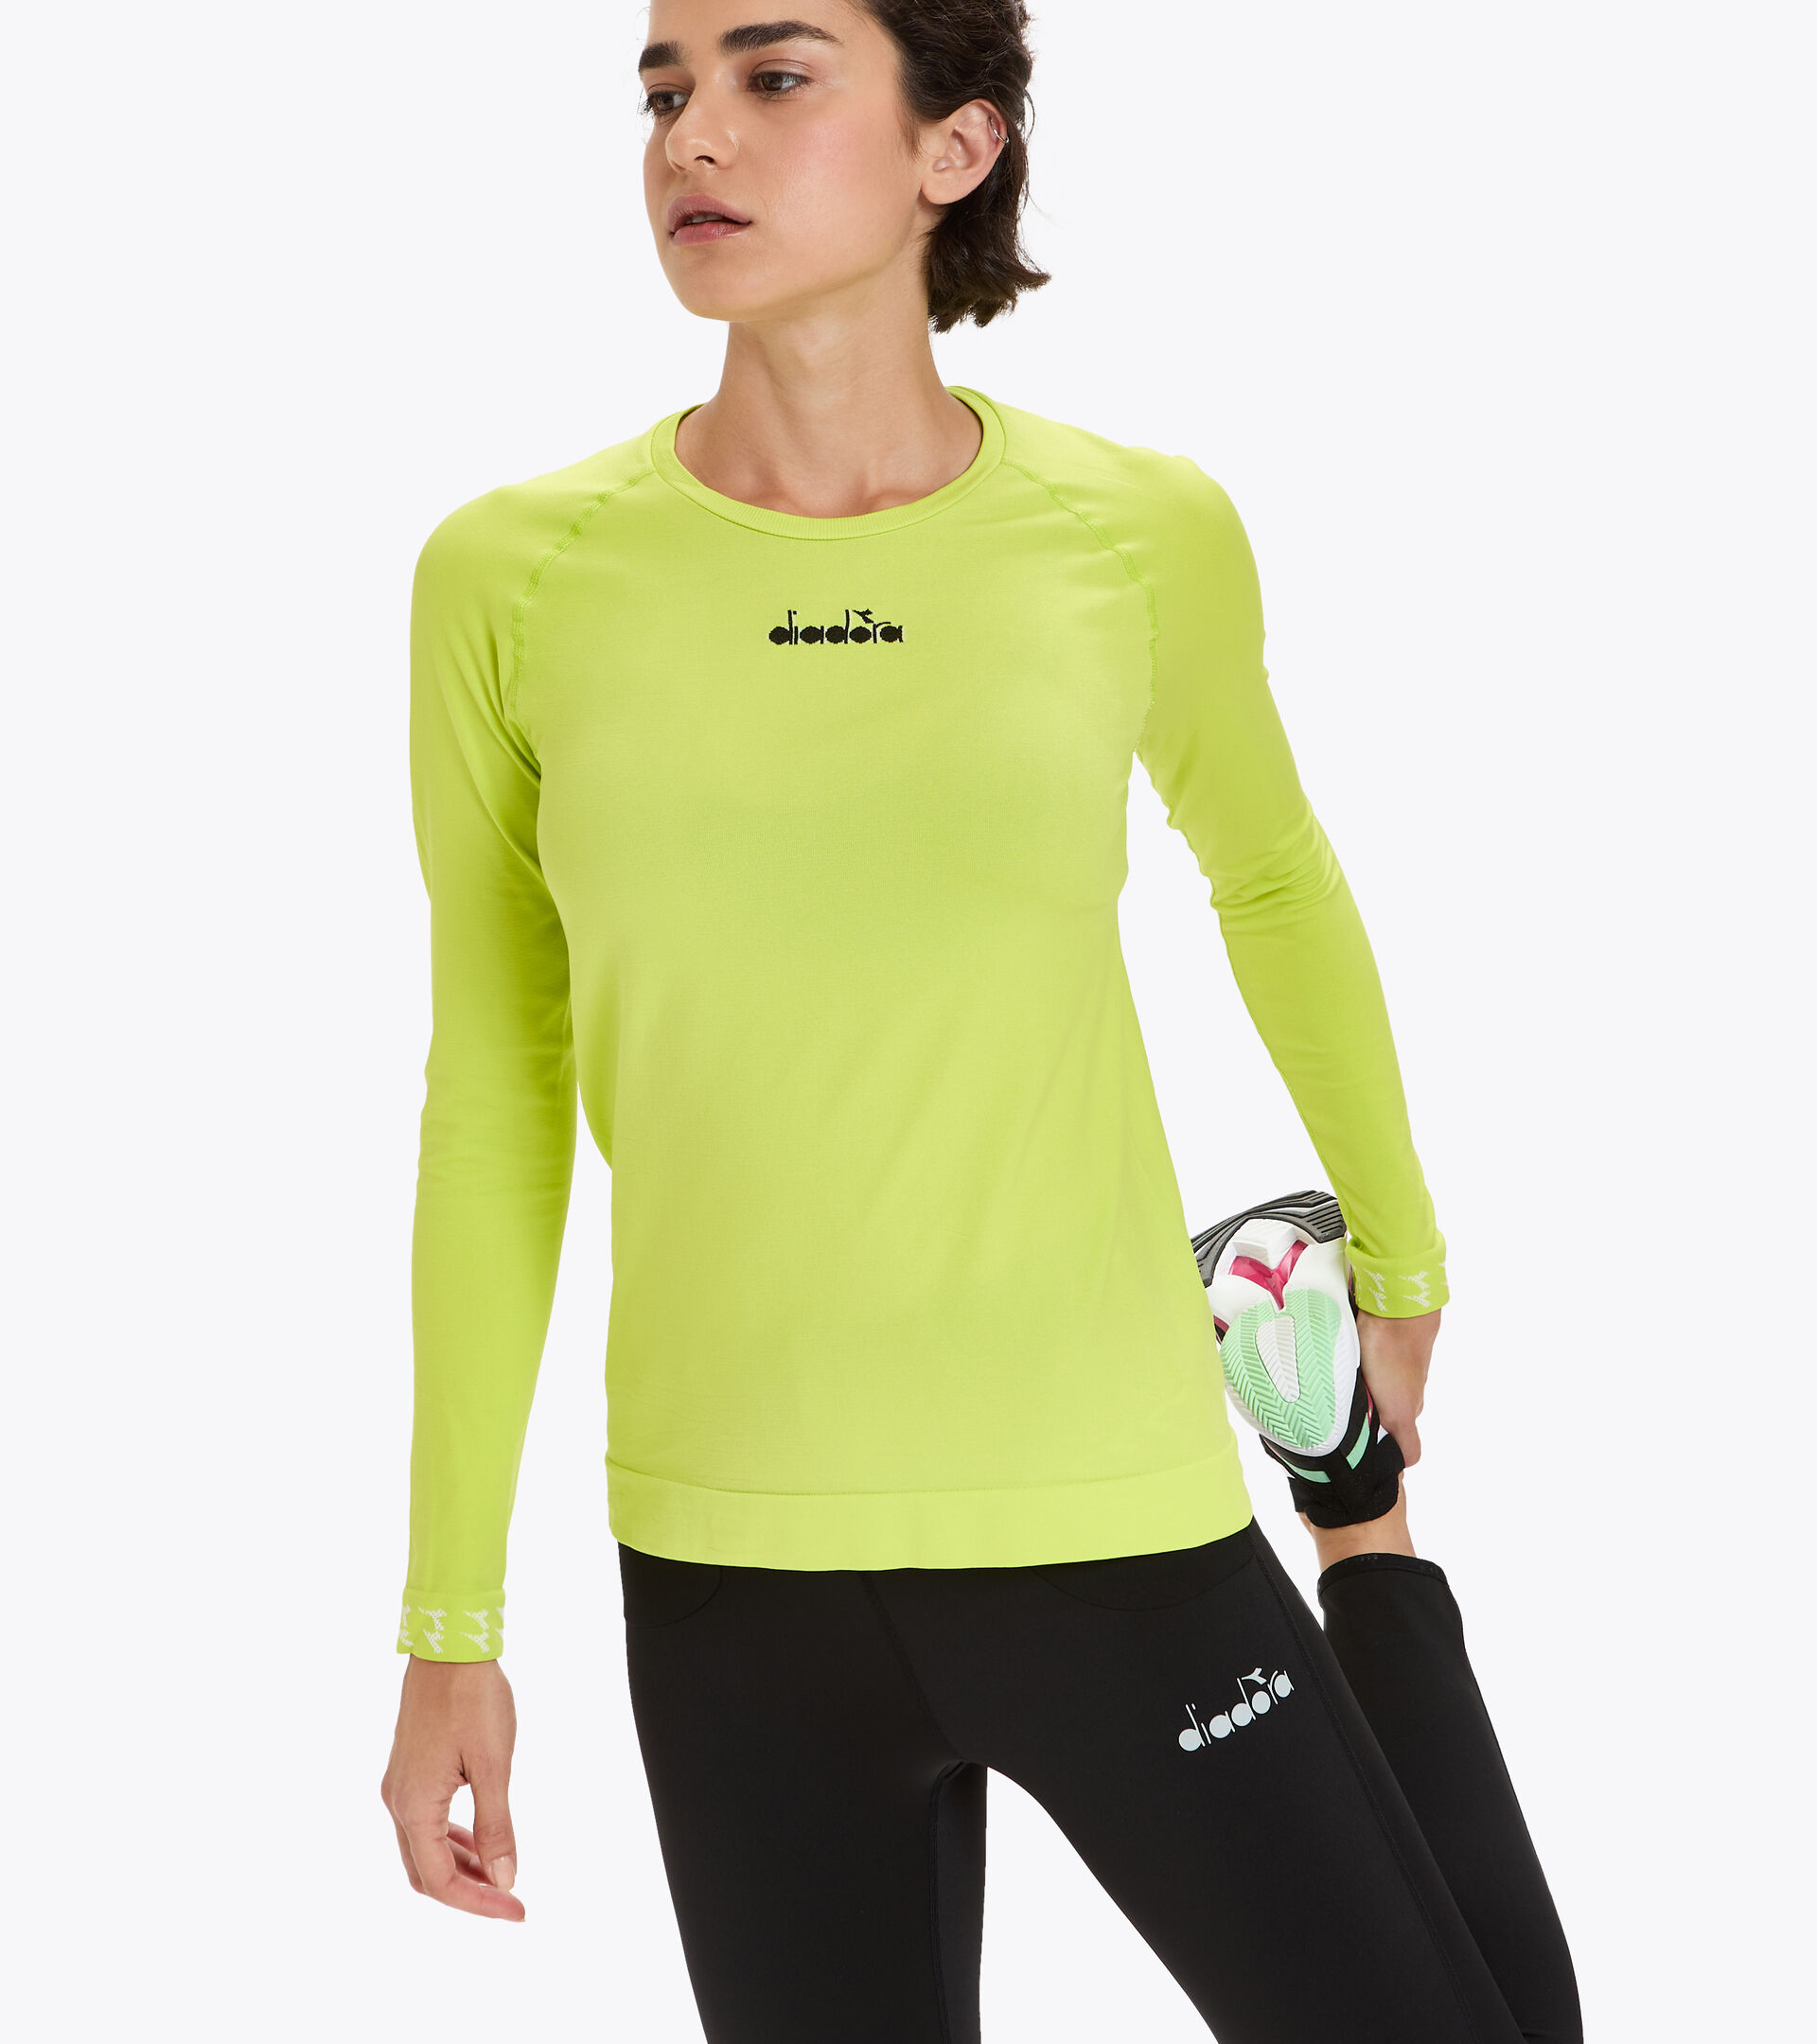 Camiseta para correr Made in Italy - Mujer L. LS SKIN FRIENDLY T-SHIRT MANANTIALES DE SULFURO - Diadora